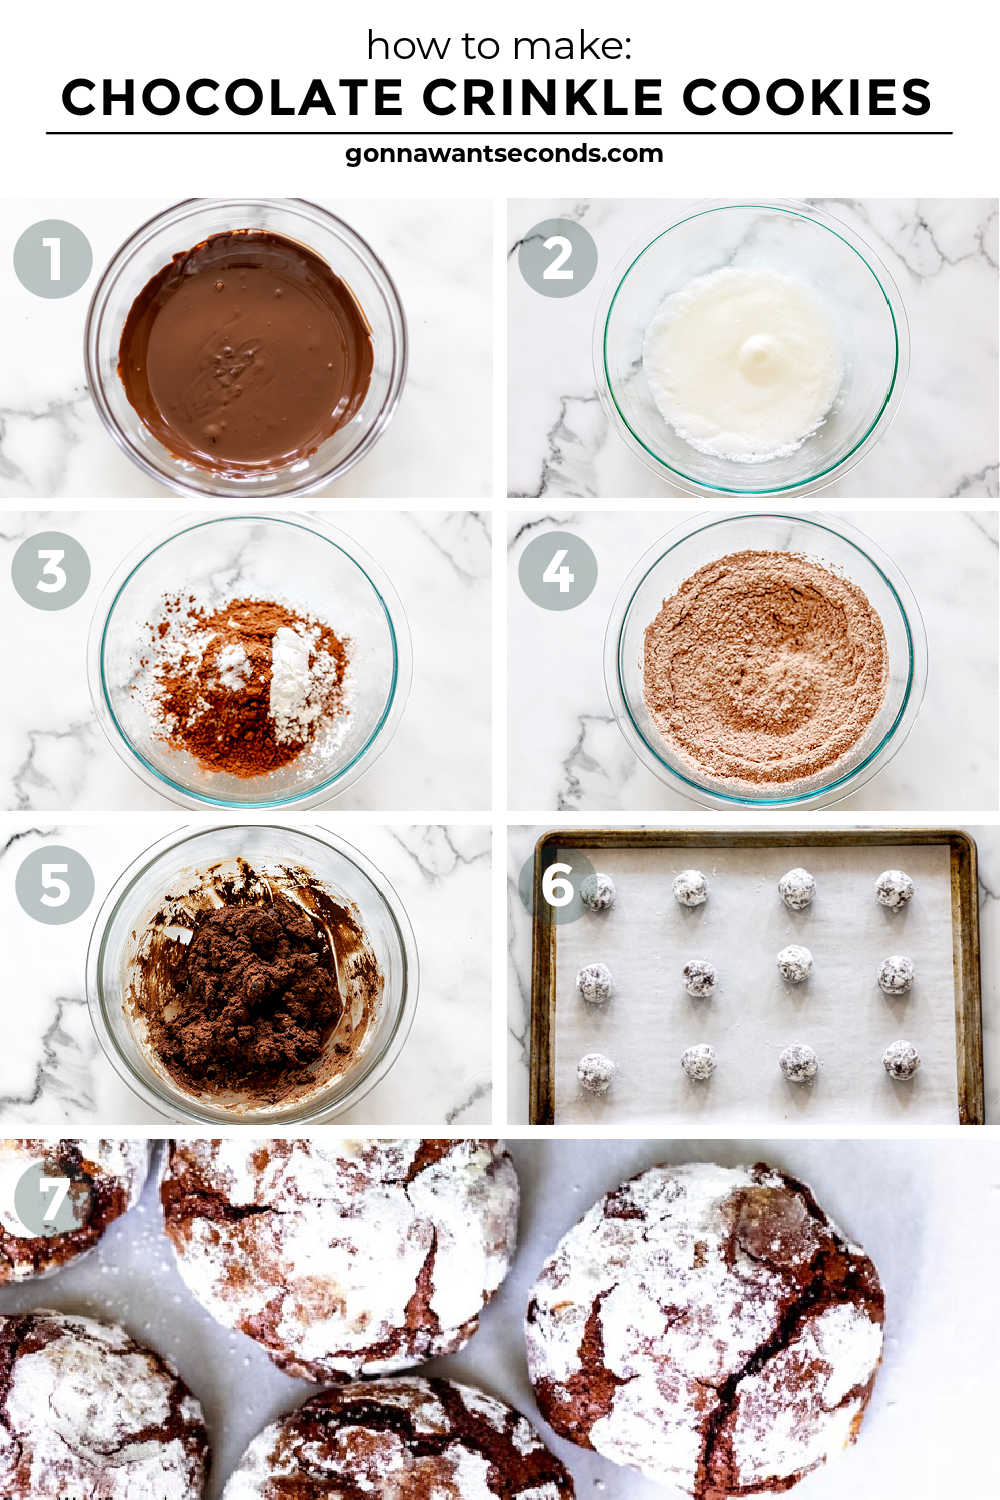 Step by step how to make chocolate crinkle cookies